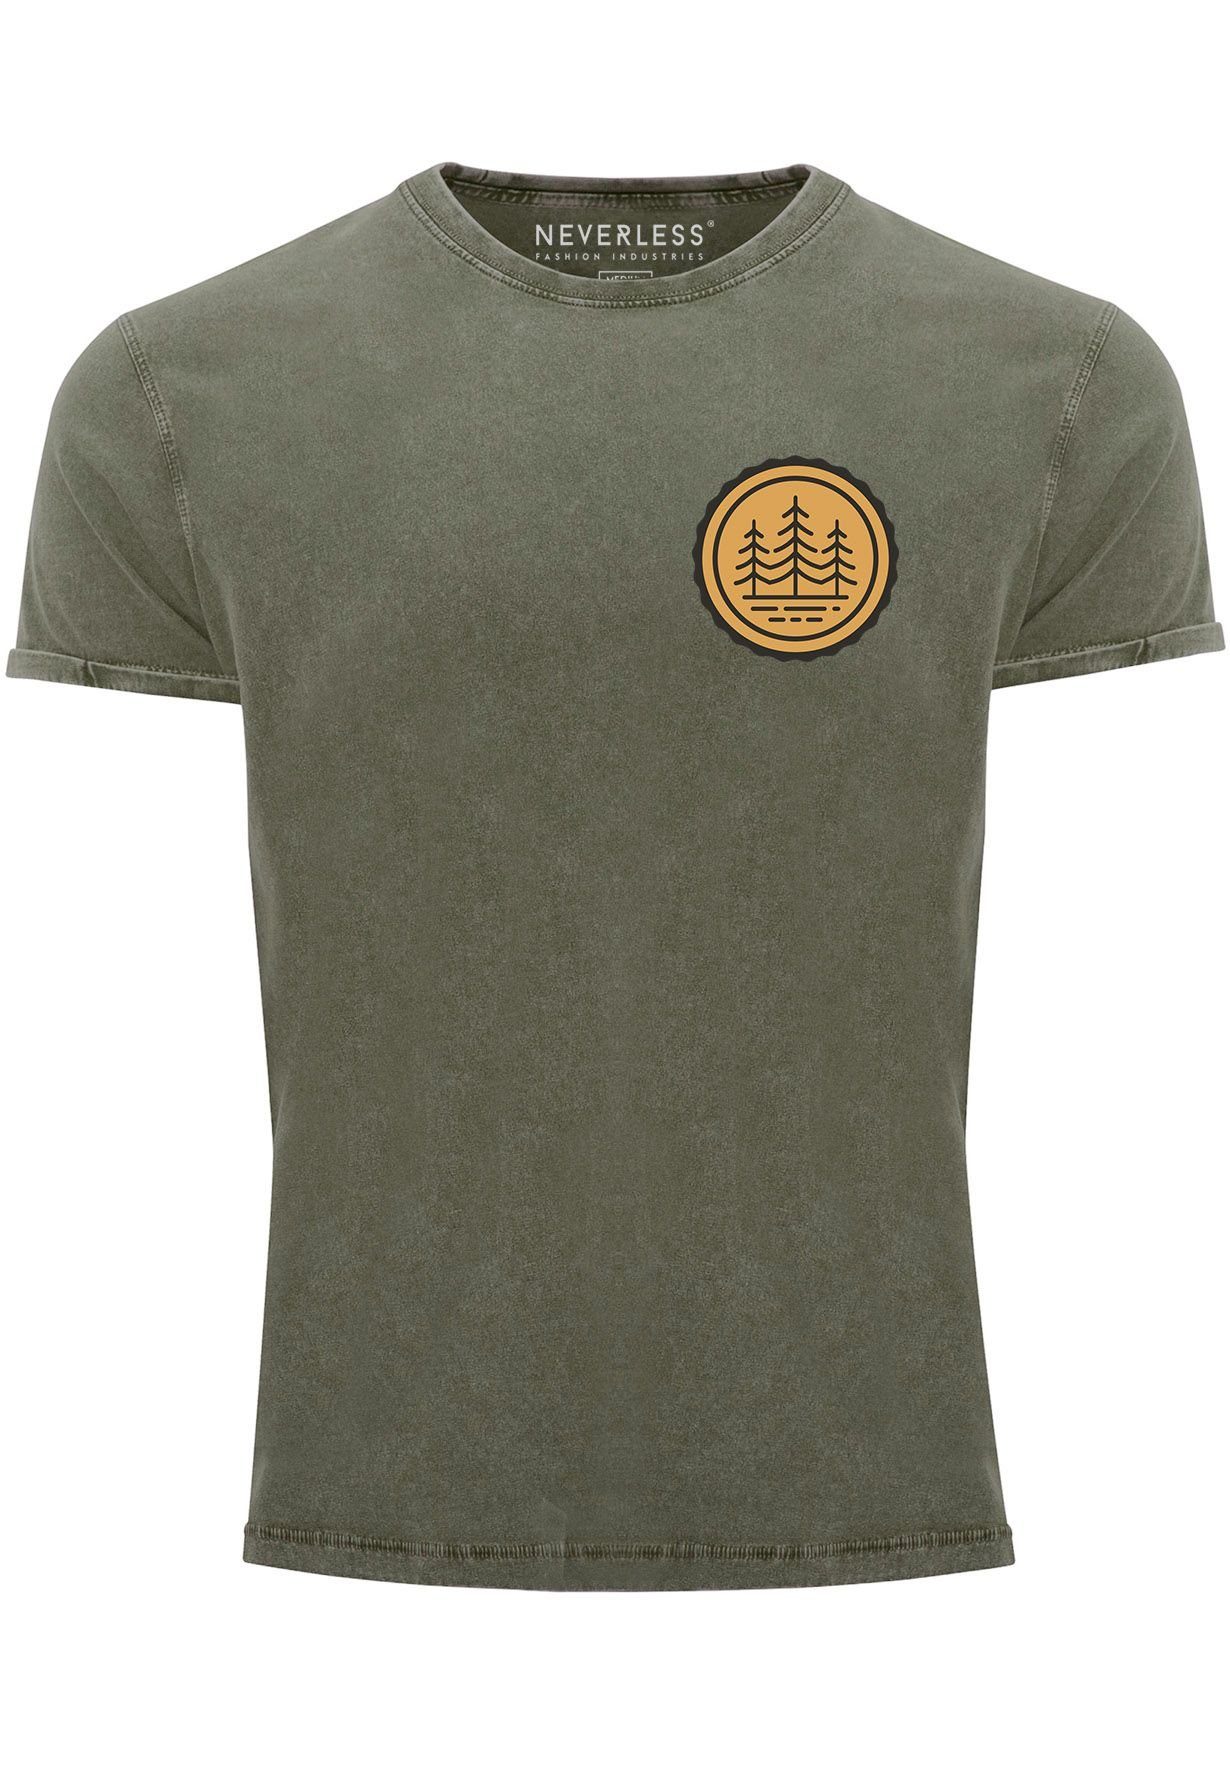 Neverless Print-Shirt Herren Vintage Shirt Wald Bäume Logo Badge Naturliebhaber Outdoor Fash mit Print oliv